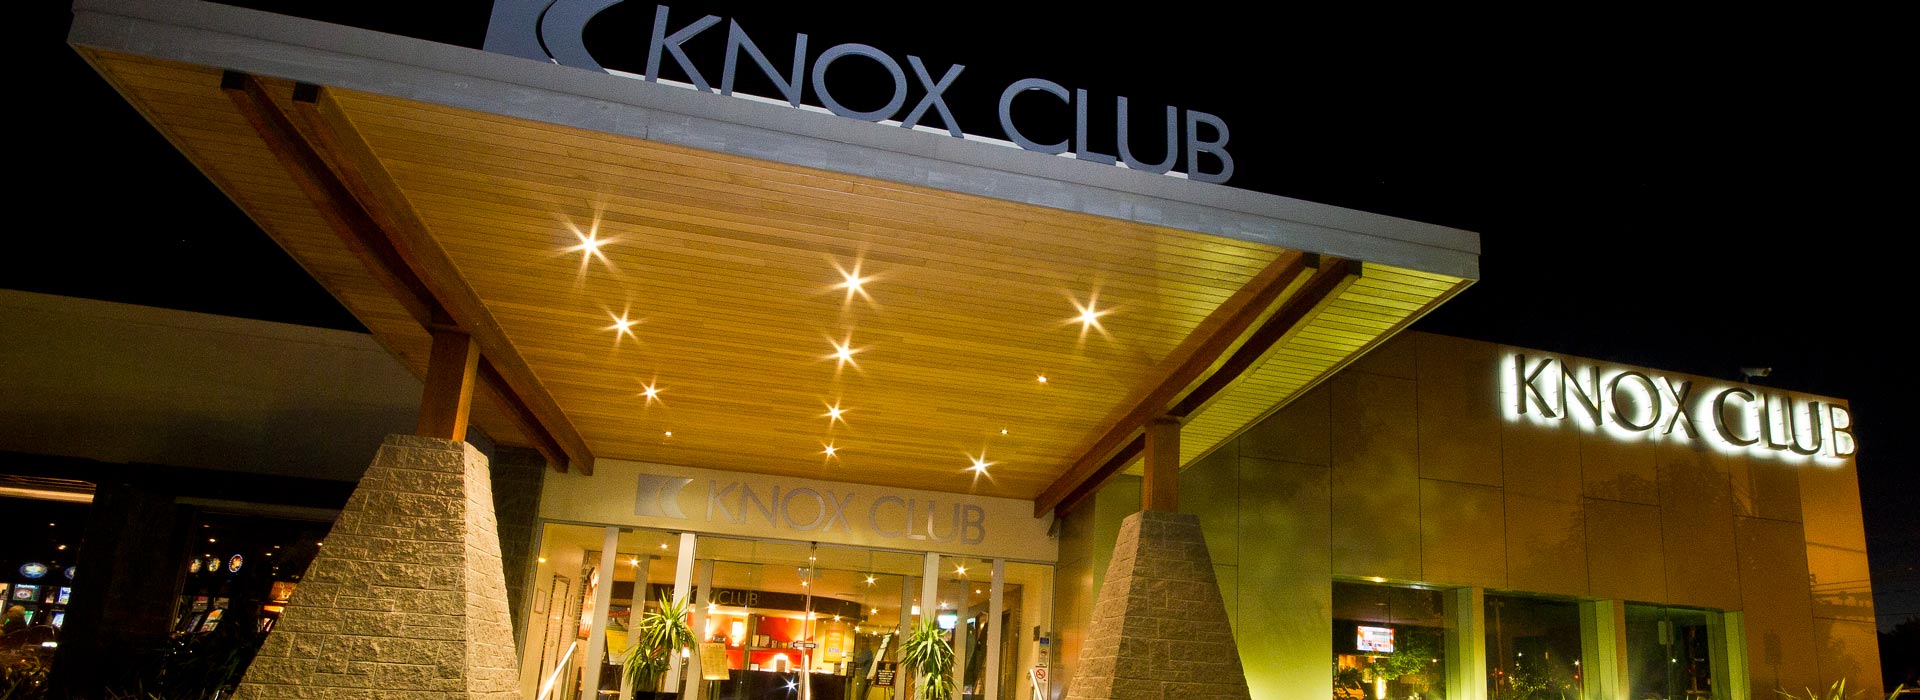 Knox Club Wantirna South | Bistro | Bar | Cafe | Sports Bar | Live Entertainment